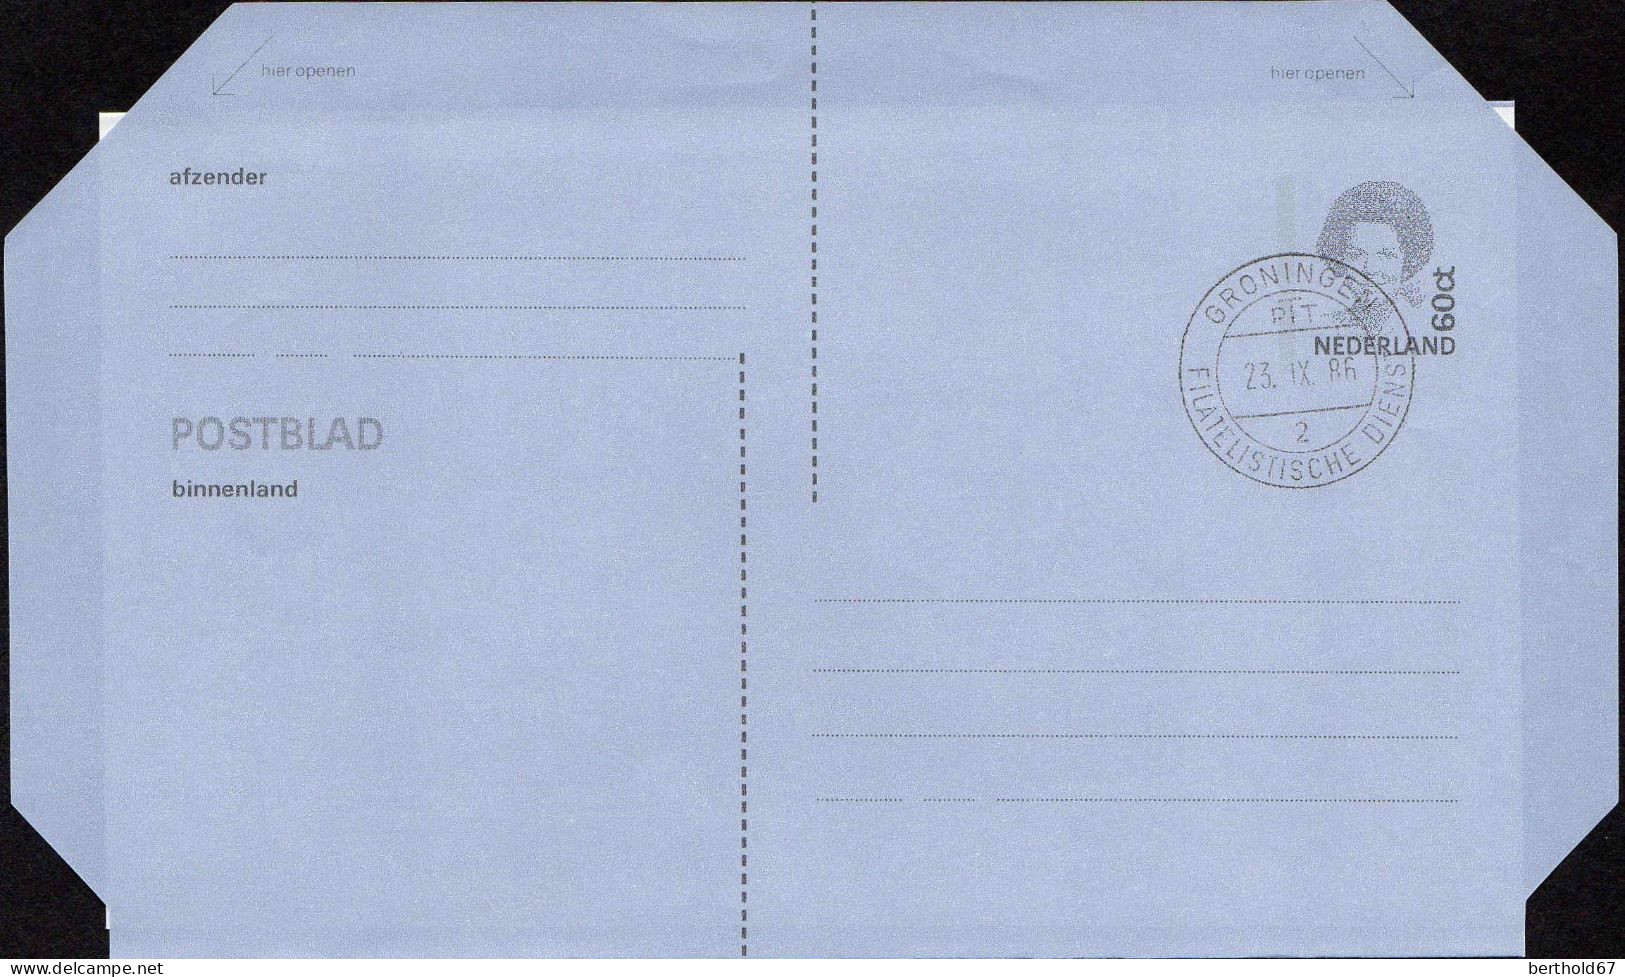 Pays-Bas Aérogr Obl (57) Postblad Binnenland 55ct Reine Beatrix (TB Cachet à Date) 60ct Bande Phosphore 28x2mm - Interi Postali